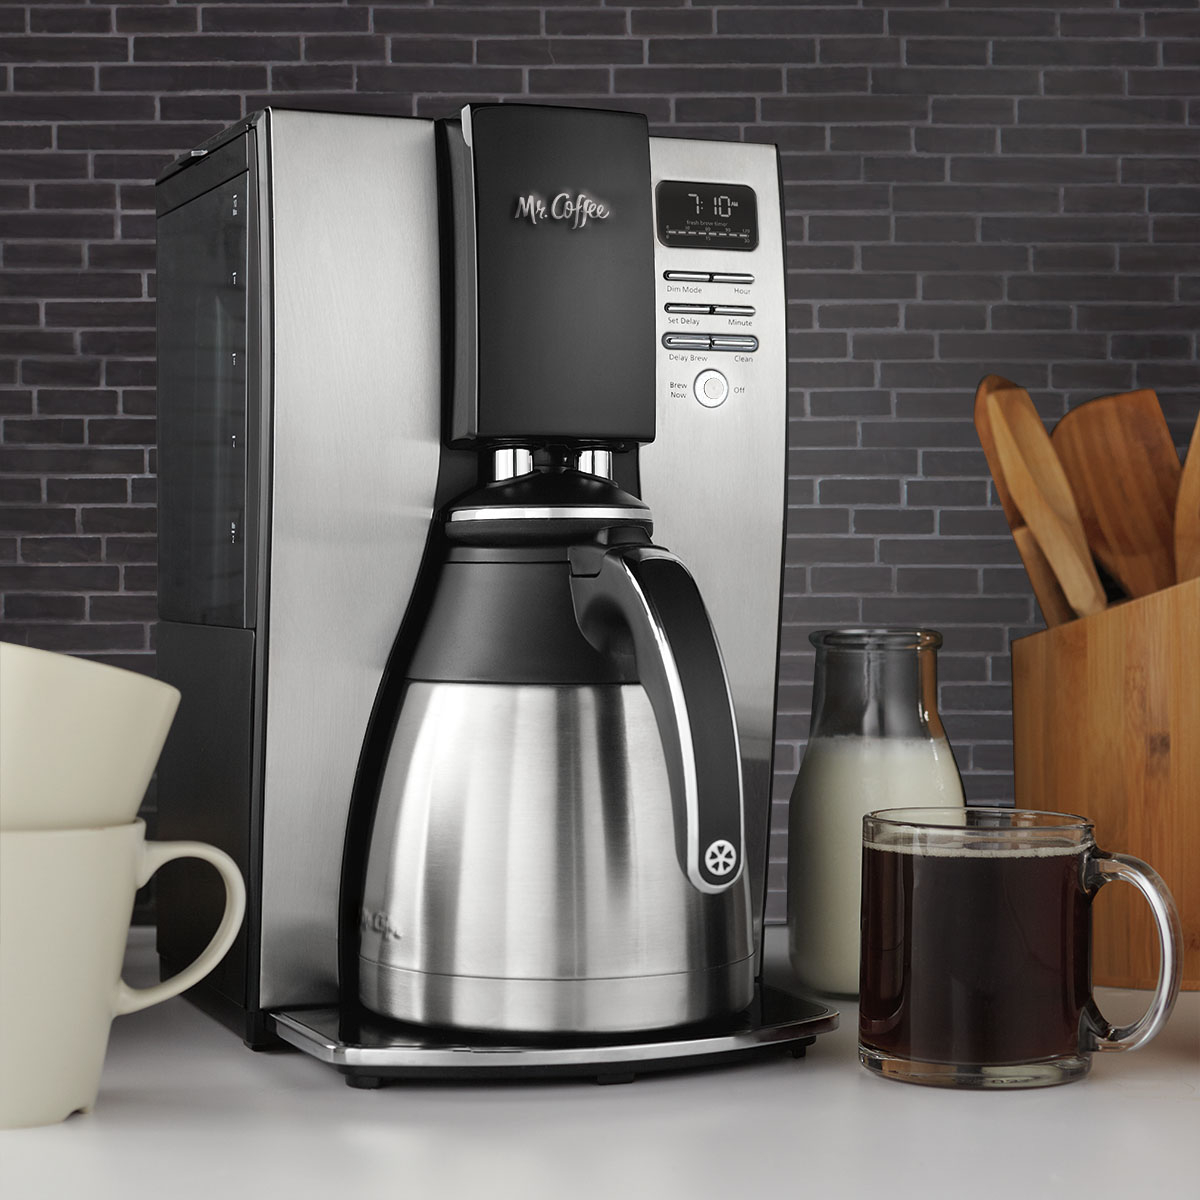 https://www.digitaltrends.com/wp-content/uploads/2020/09/mr-coffee-optimal-brew-10-cup-programmable-coffee-maker.jpg?fit=720%2C720&p=1